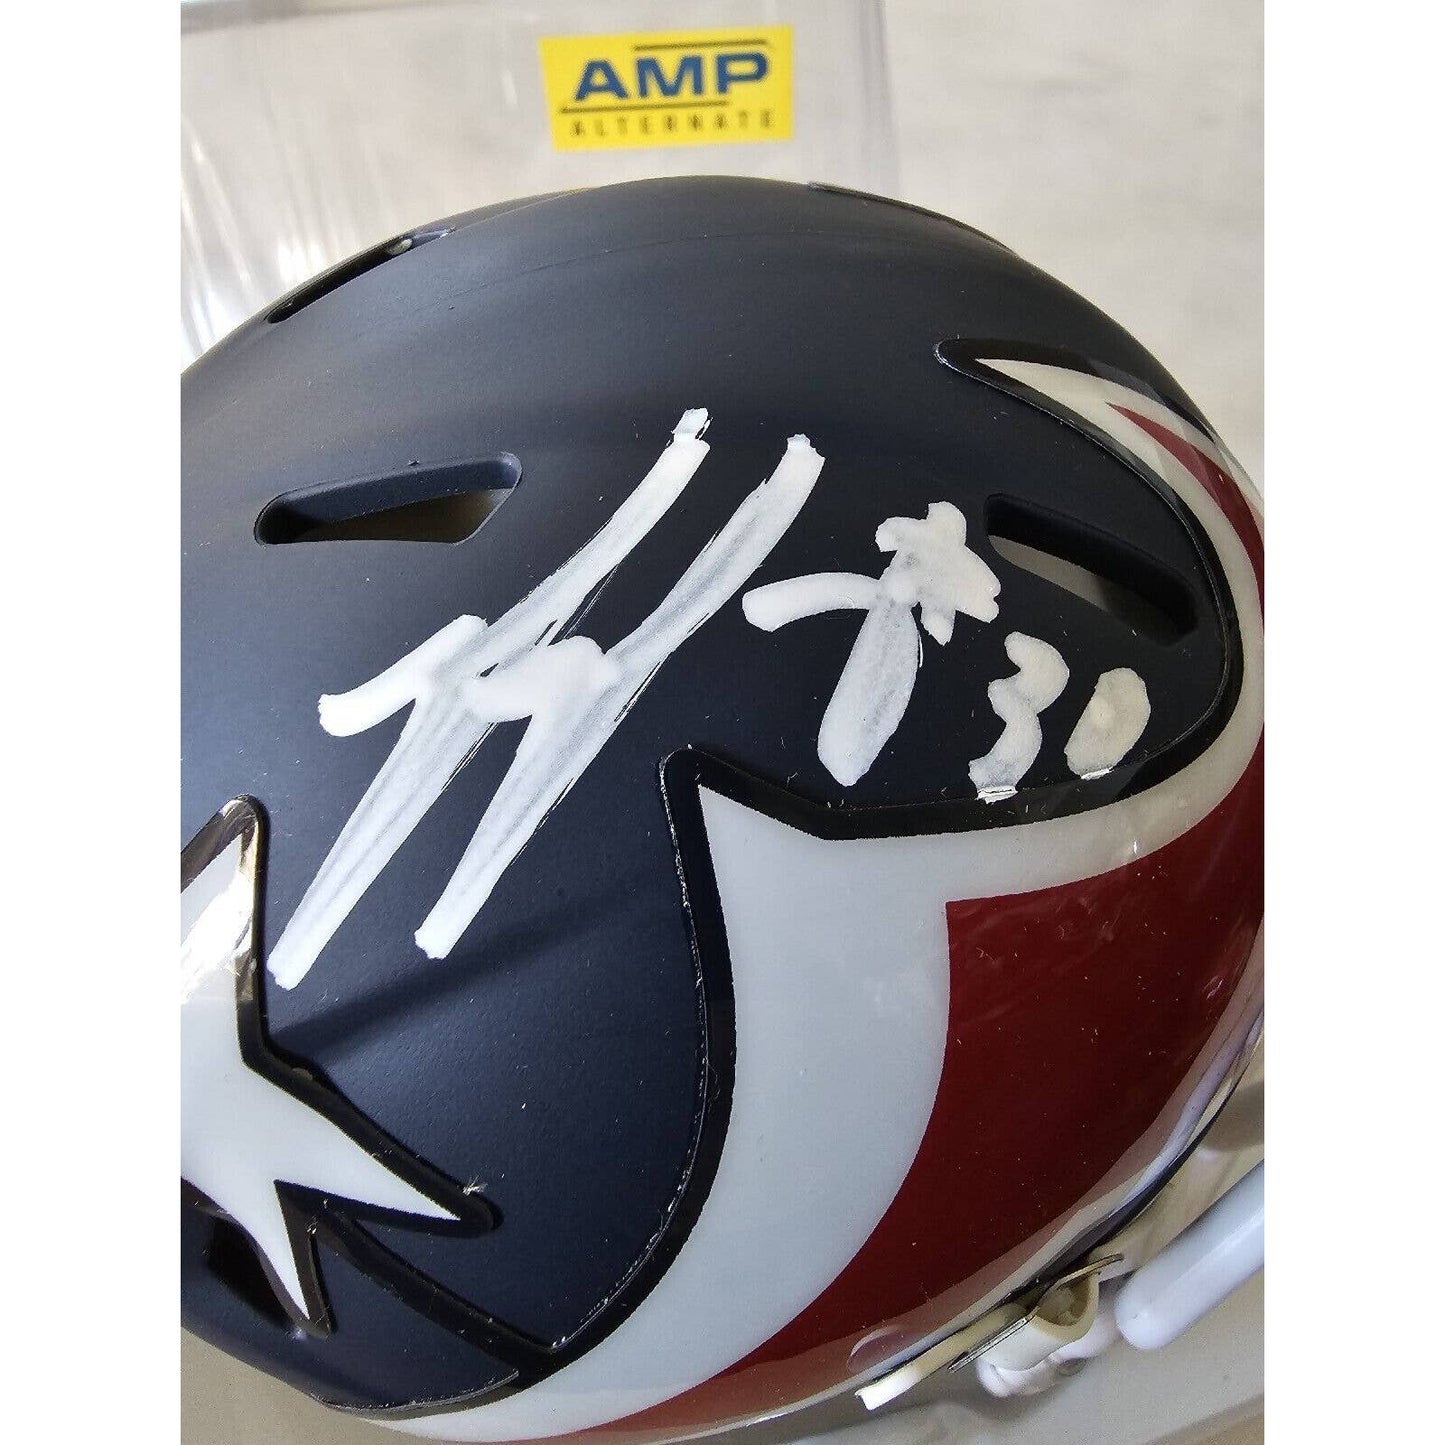 Phillip Lindsay Autographed/Signed Mini Helmet Beckett Houston Texans Amp